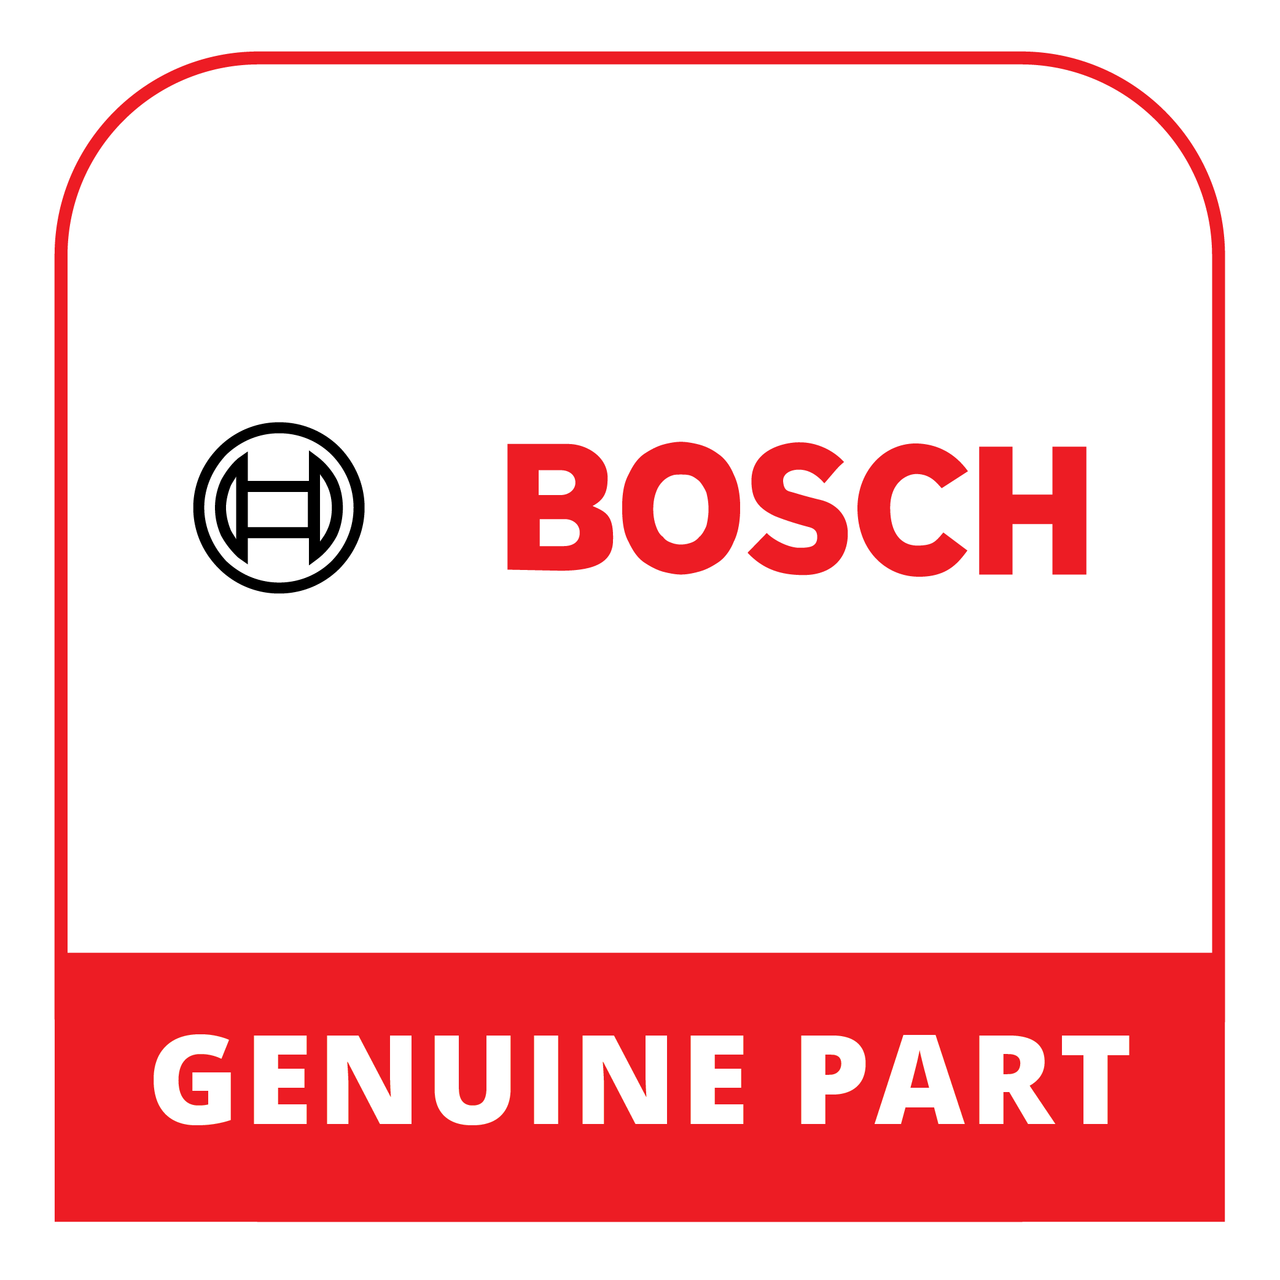 Bosch (Thermador) 20000030 - Panel-Facia - Genuine Bosch (Thermador) Part